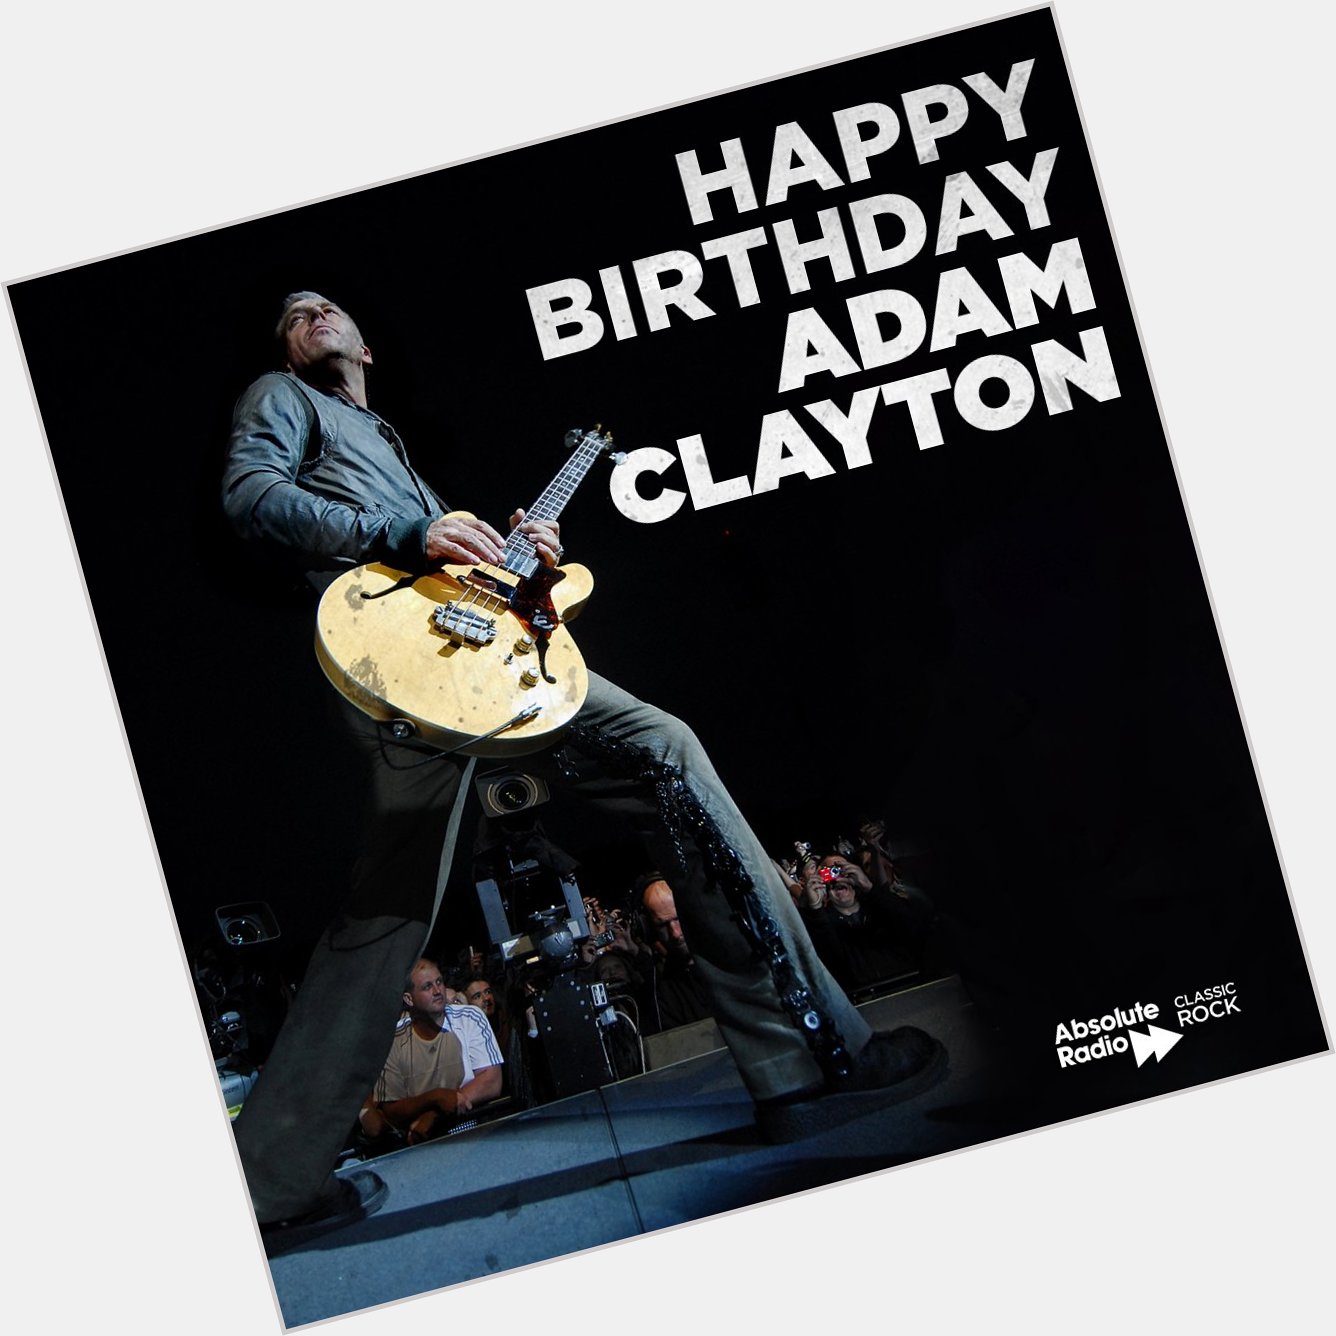 Happy birthday to trusty bassist Adam Clayton! He turns 60 today! 